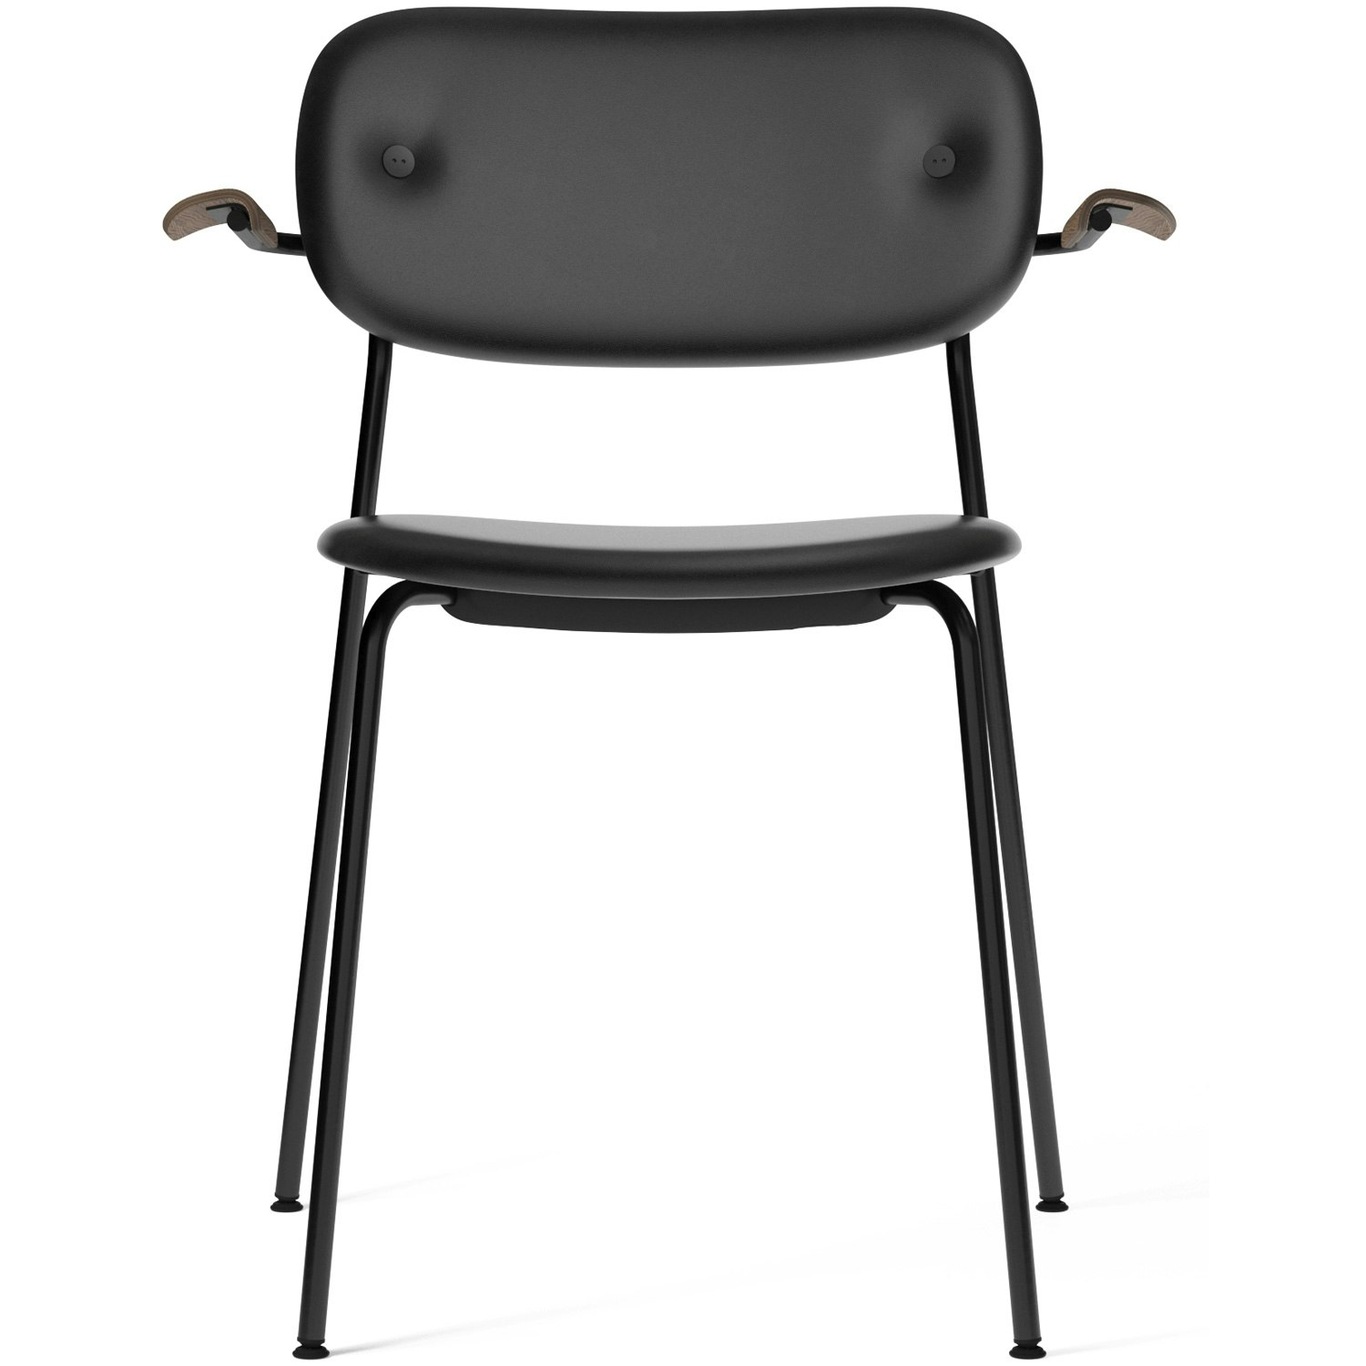 Co Dining Chair, Black, Dakar 0842, w Dk Stain Arm